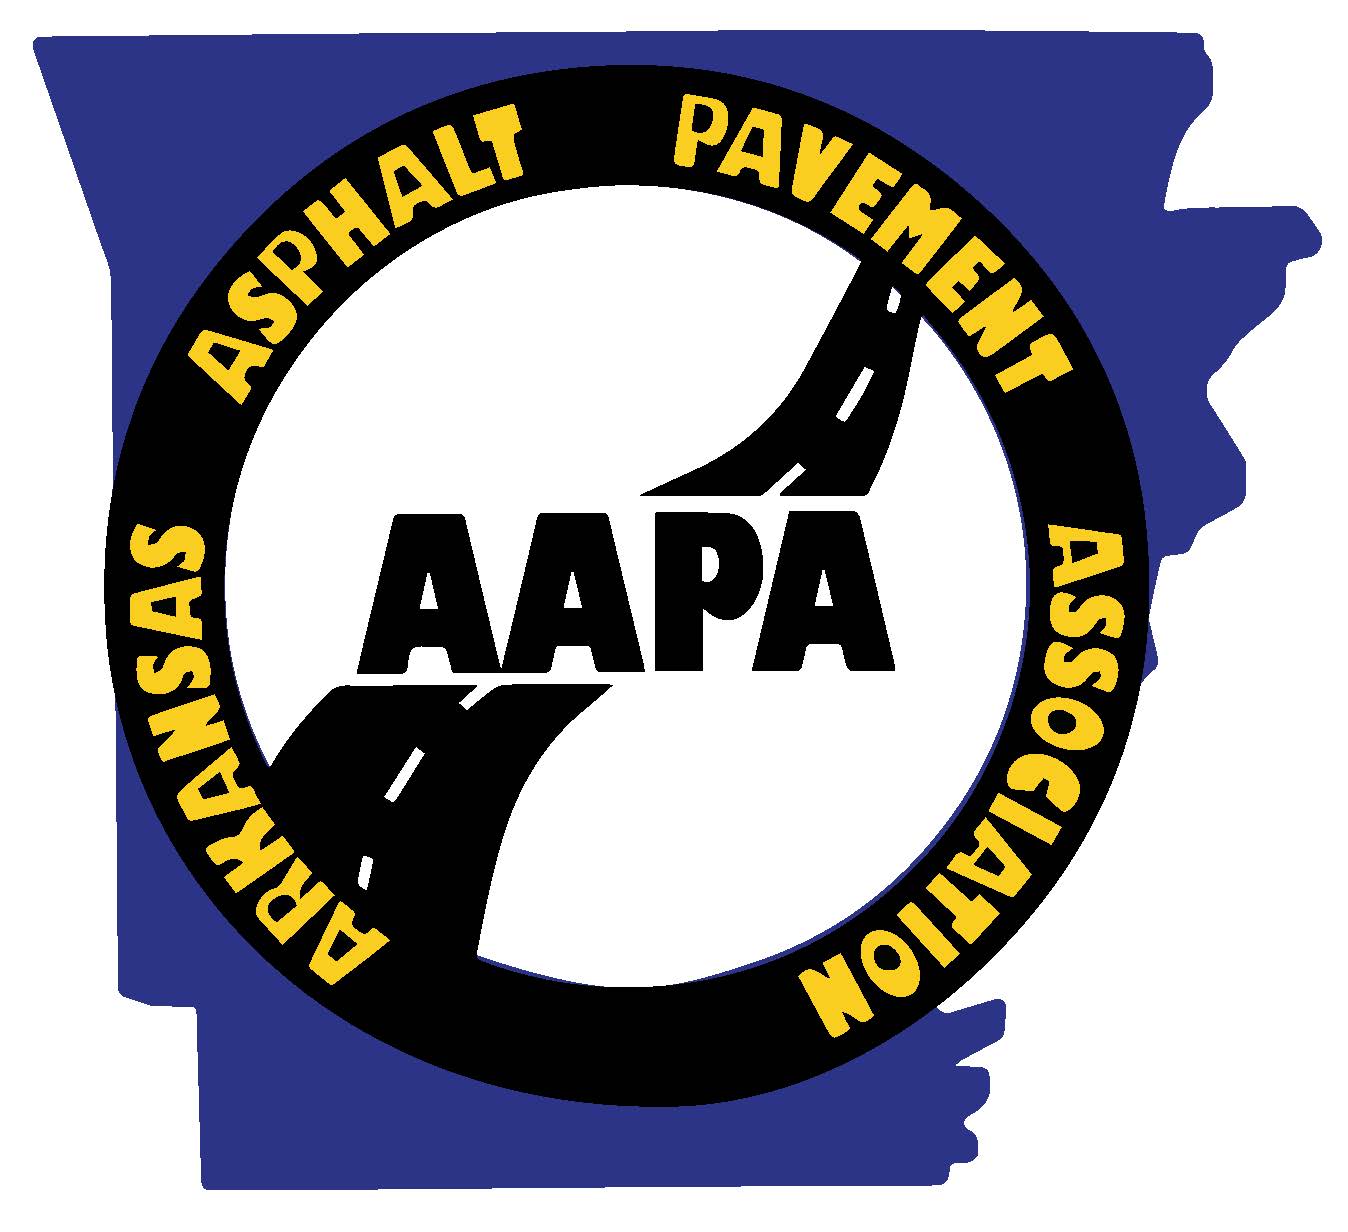 Arkansas Asphalt Pavement Association